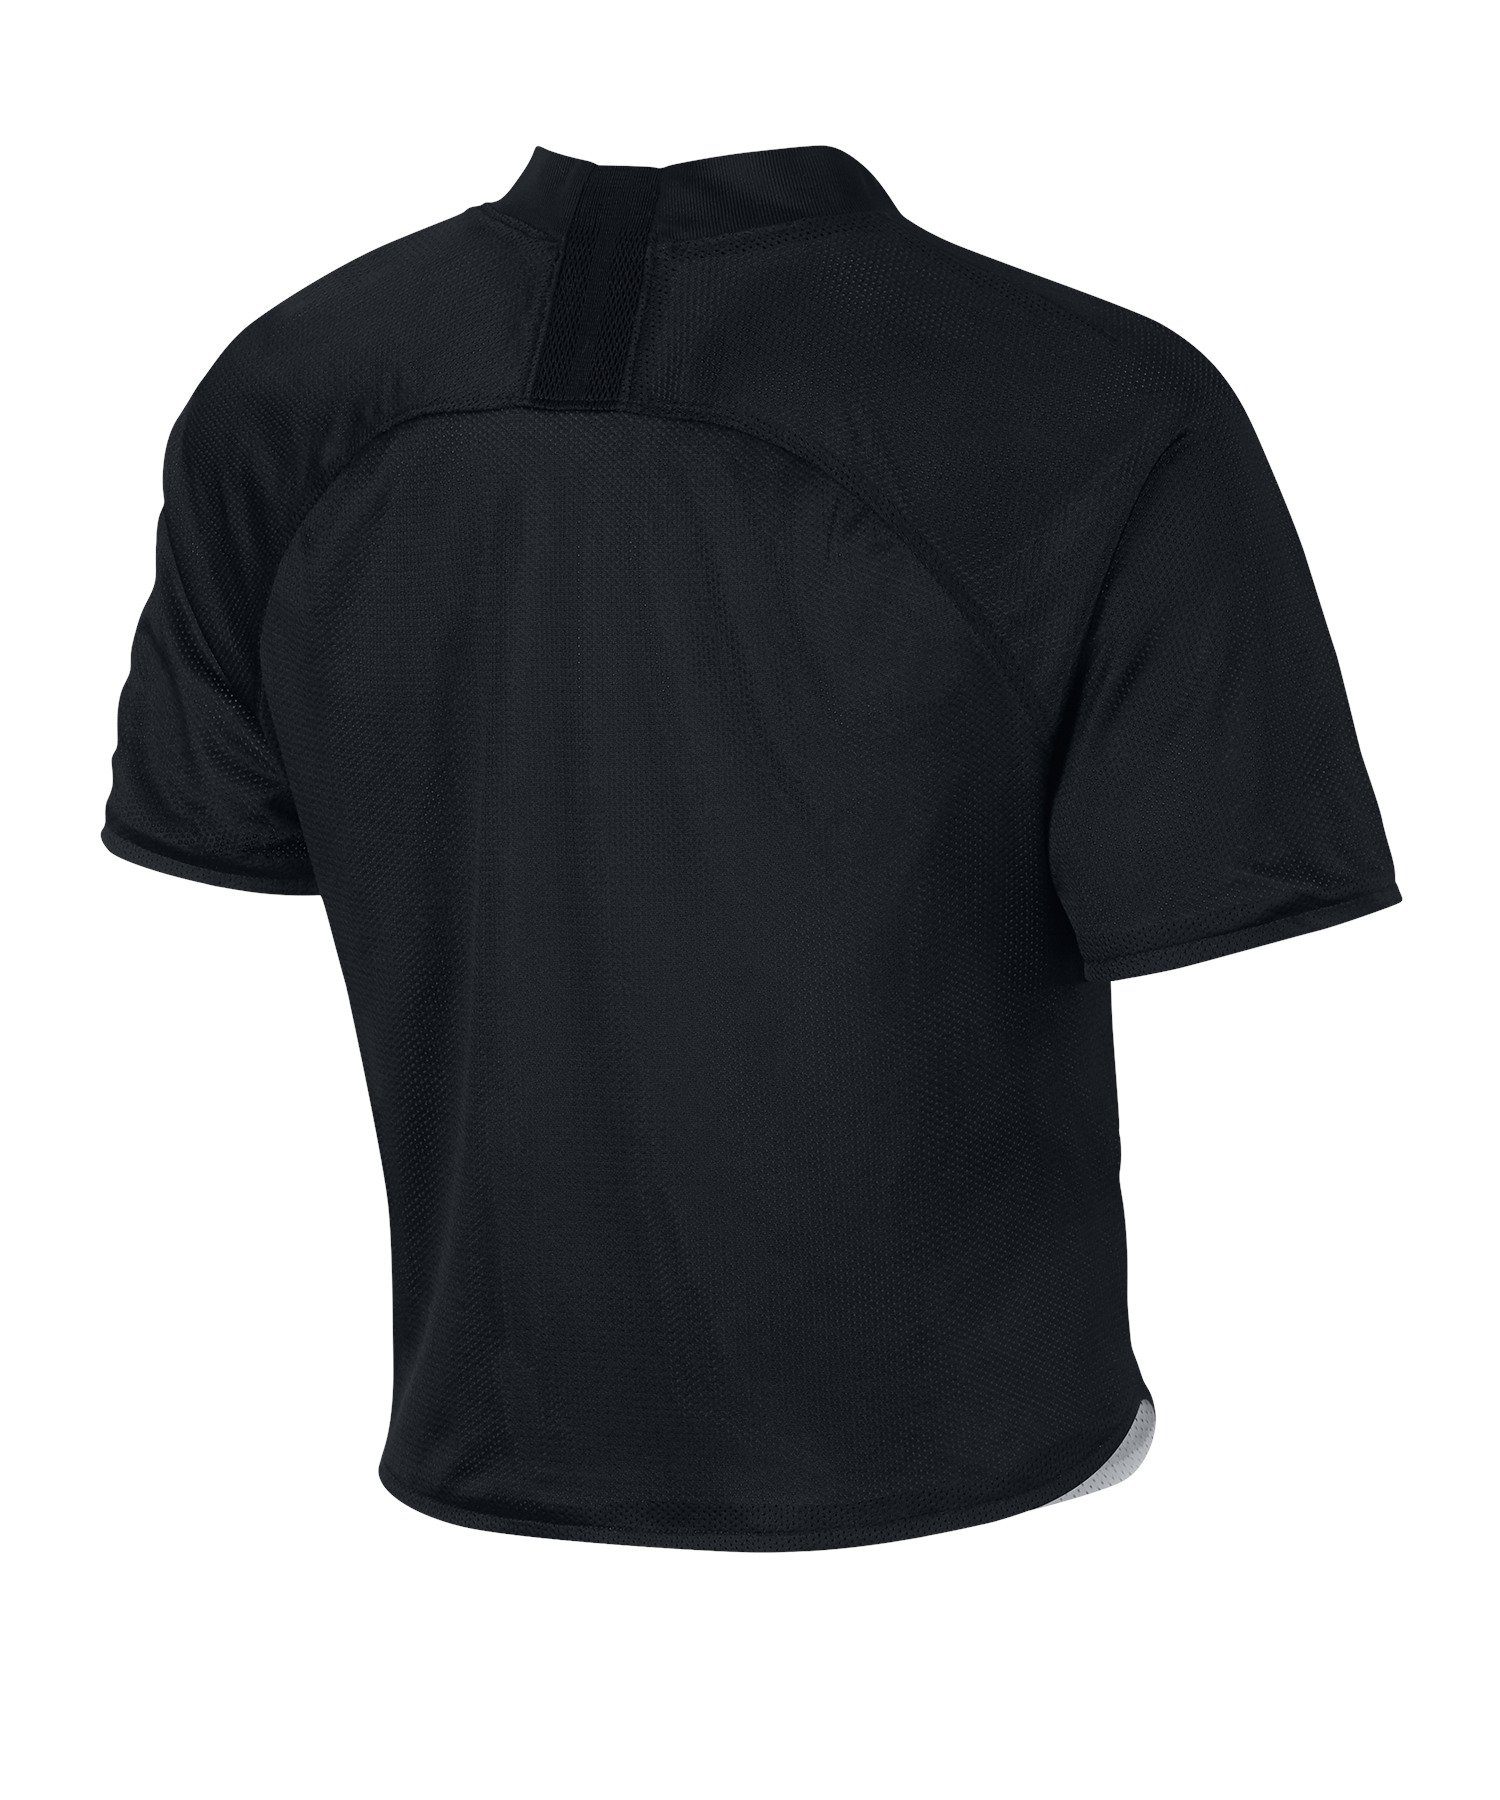 Nike Sportswear T-Shirt Damen default F.C. Top Schwarz Crop